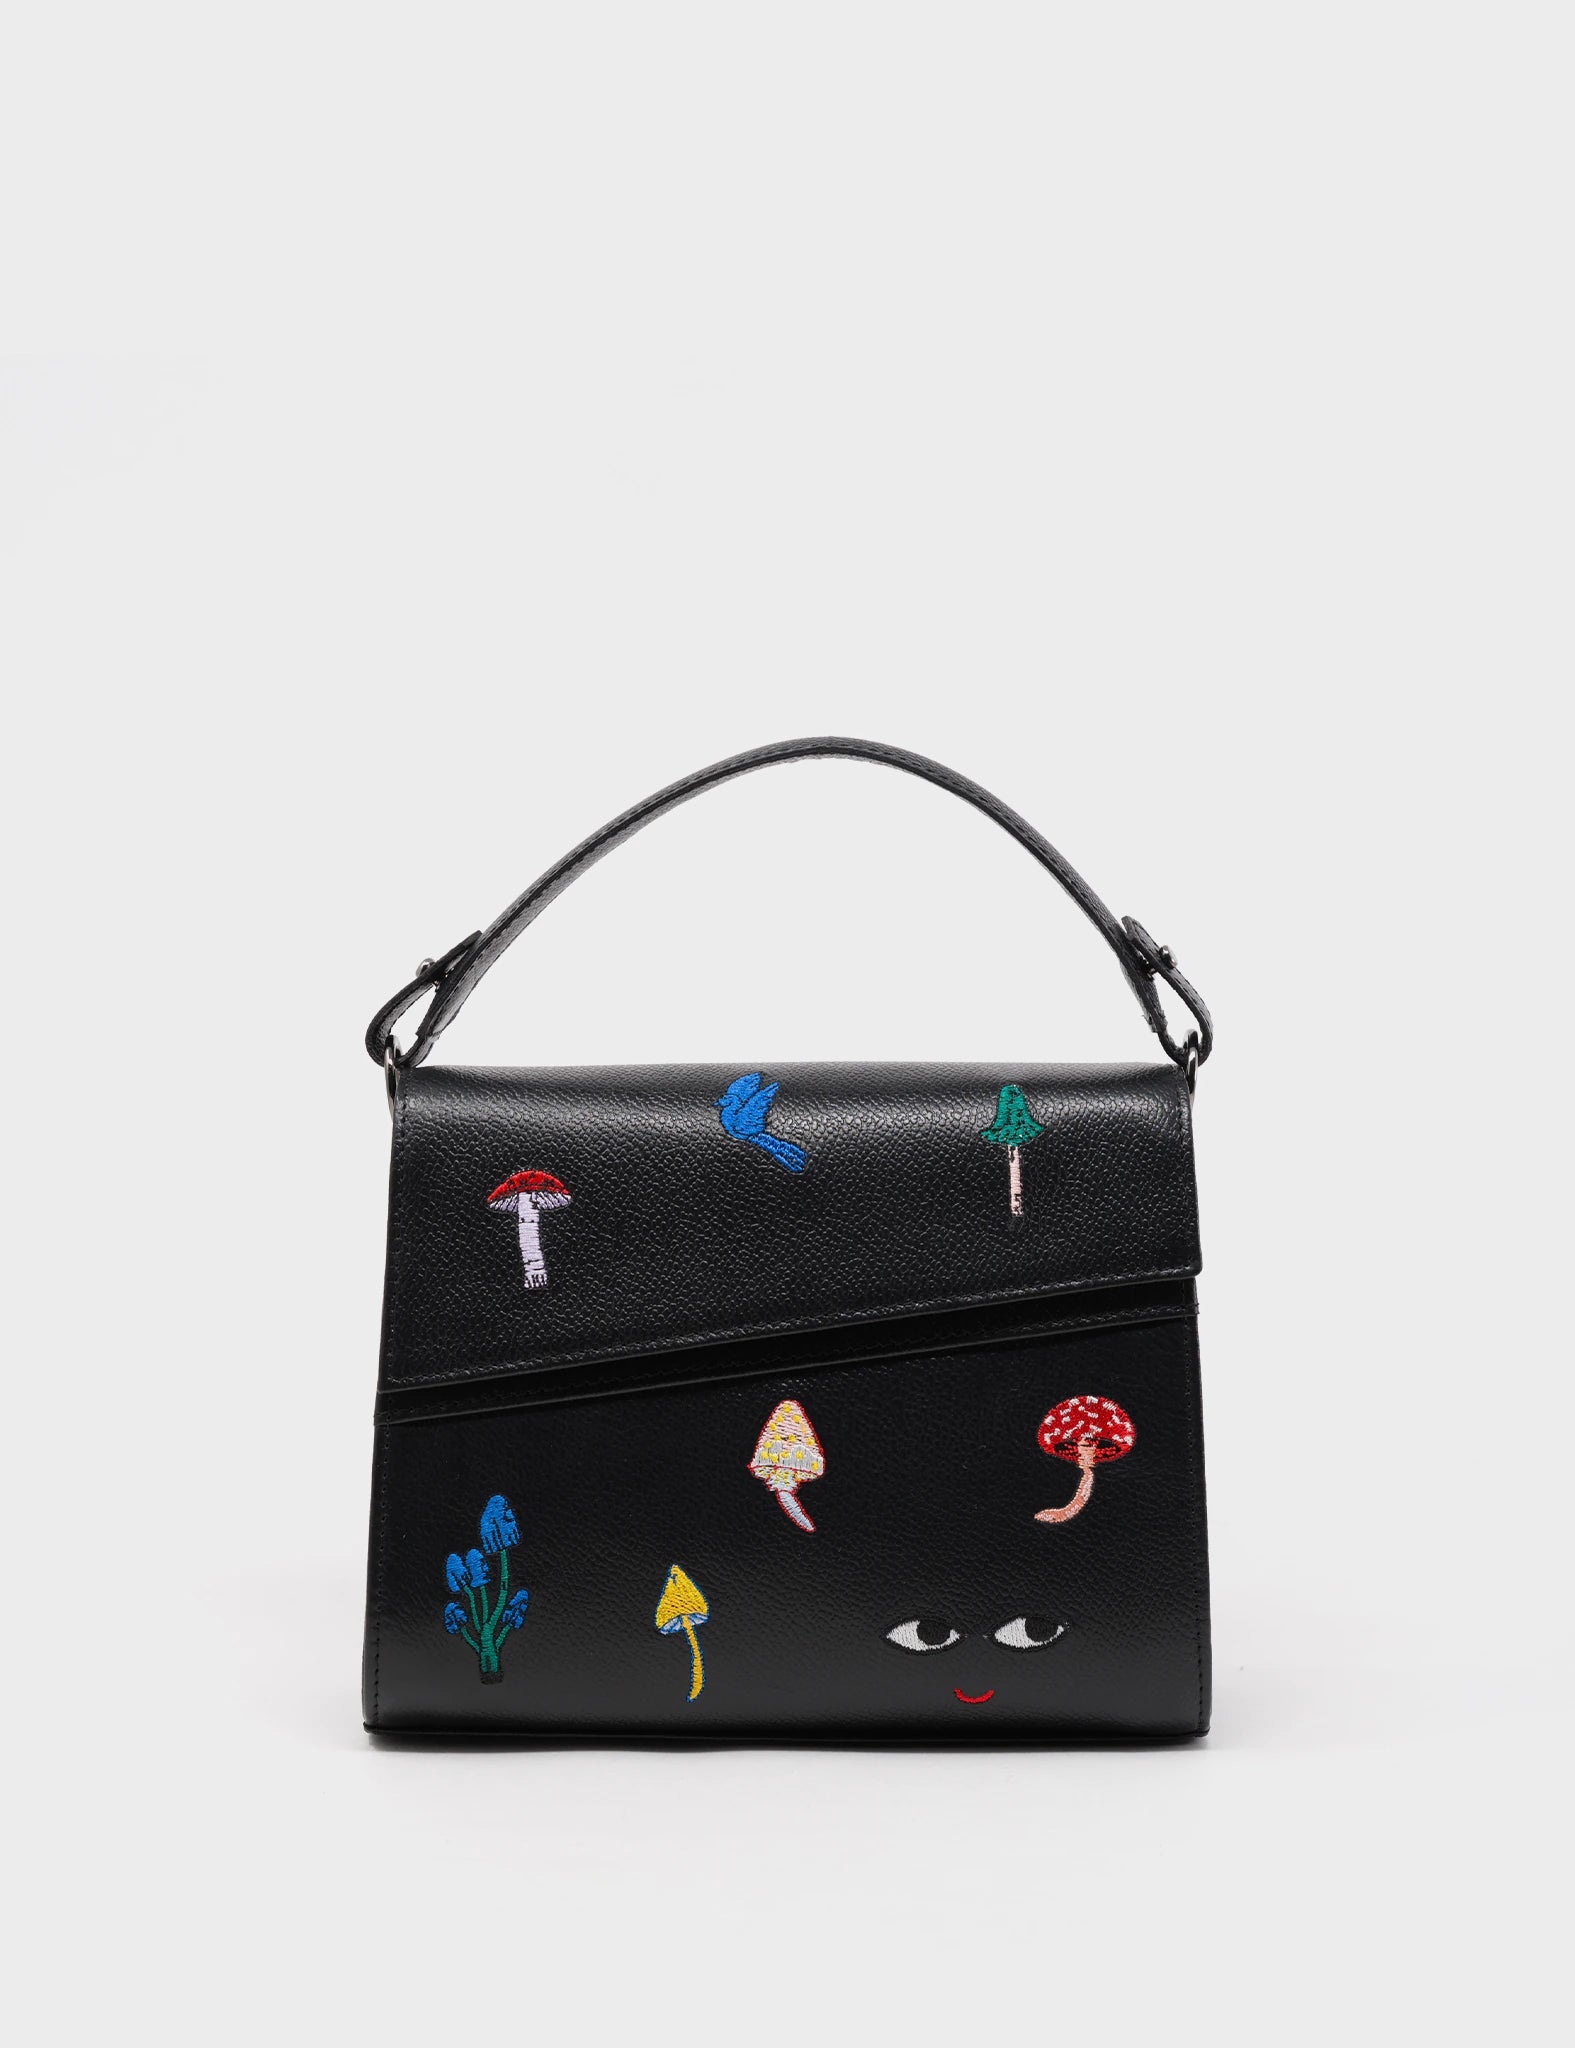 Anastasio Mini Crossbody Handbag Black Leather - Woodlands Embroidery - Front